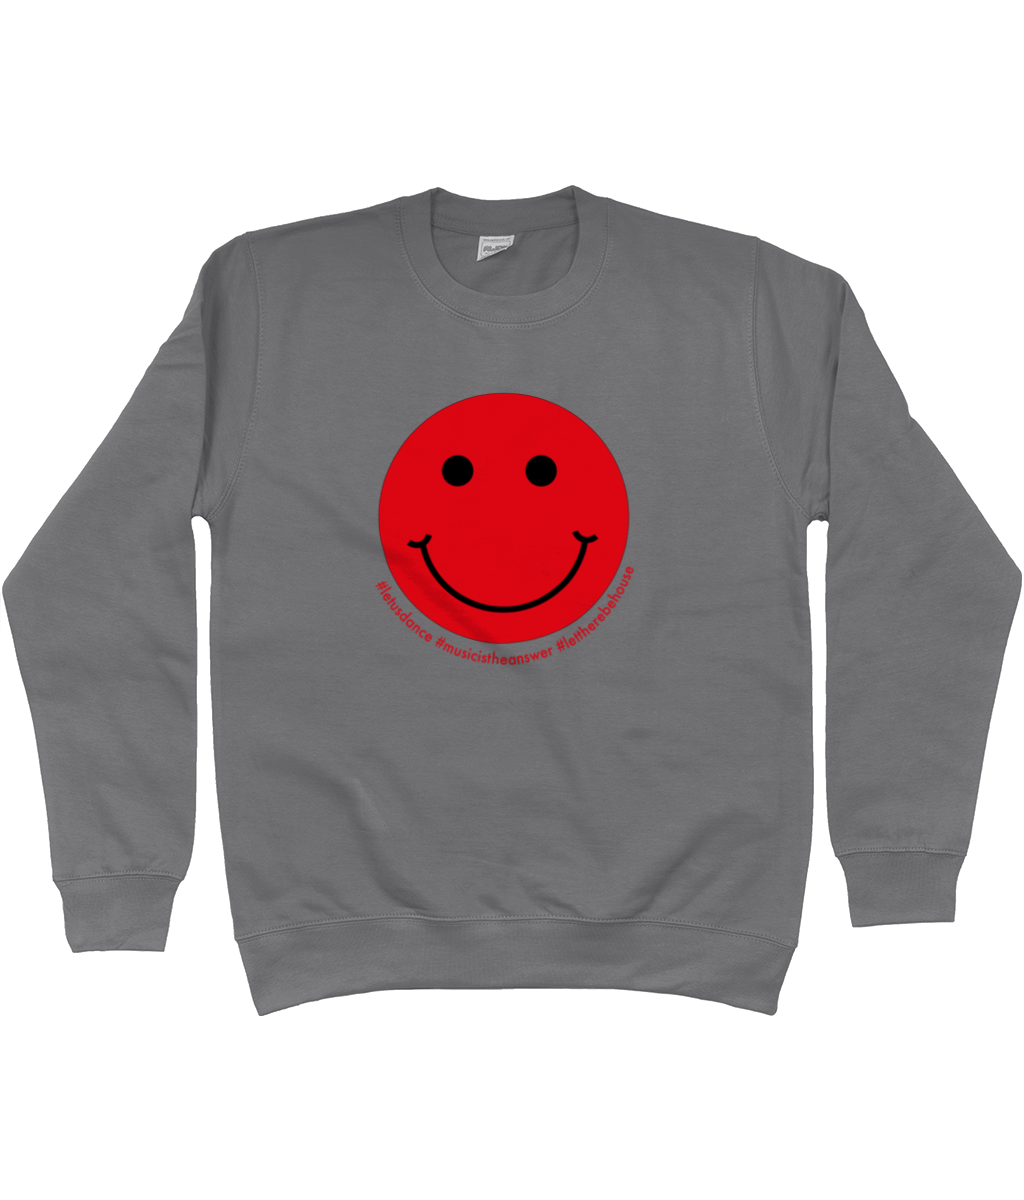 Sweatshirt Smiley Red